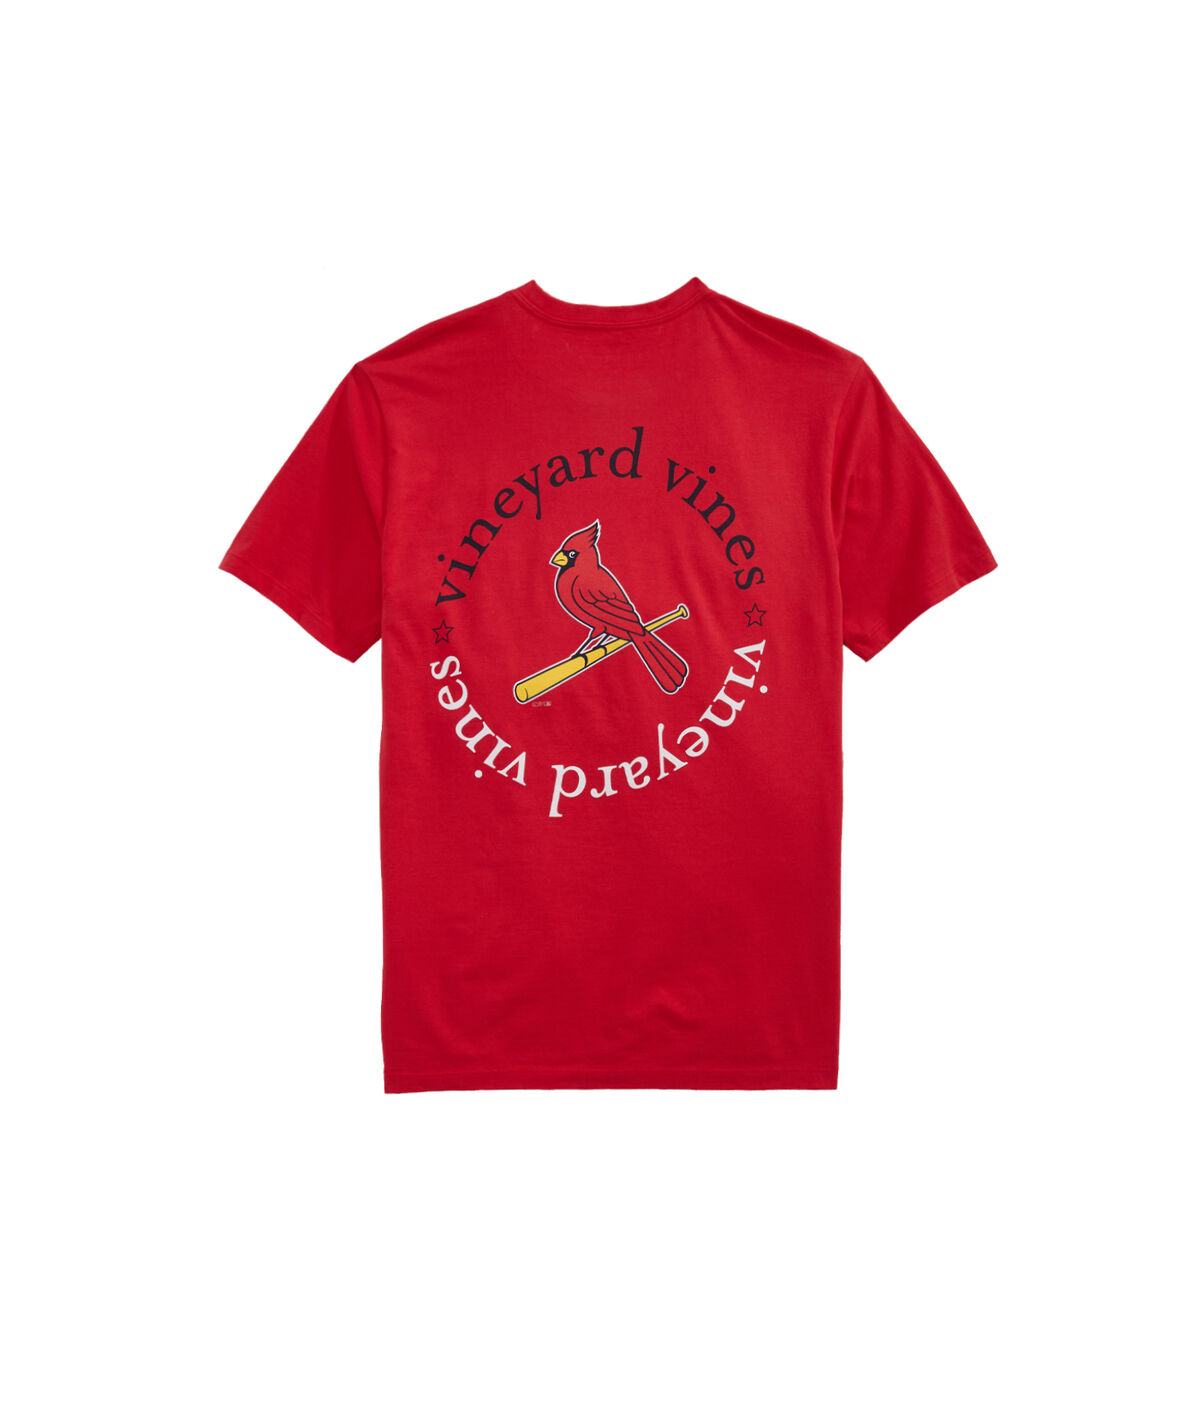 Shop St. Louis Cardinals Circle Logo T-Shirt at vineyard vines